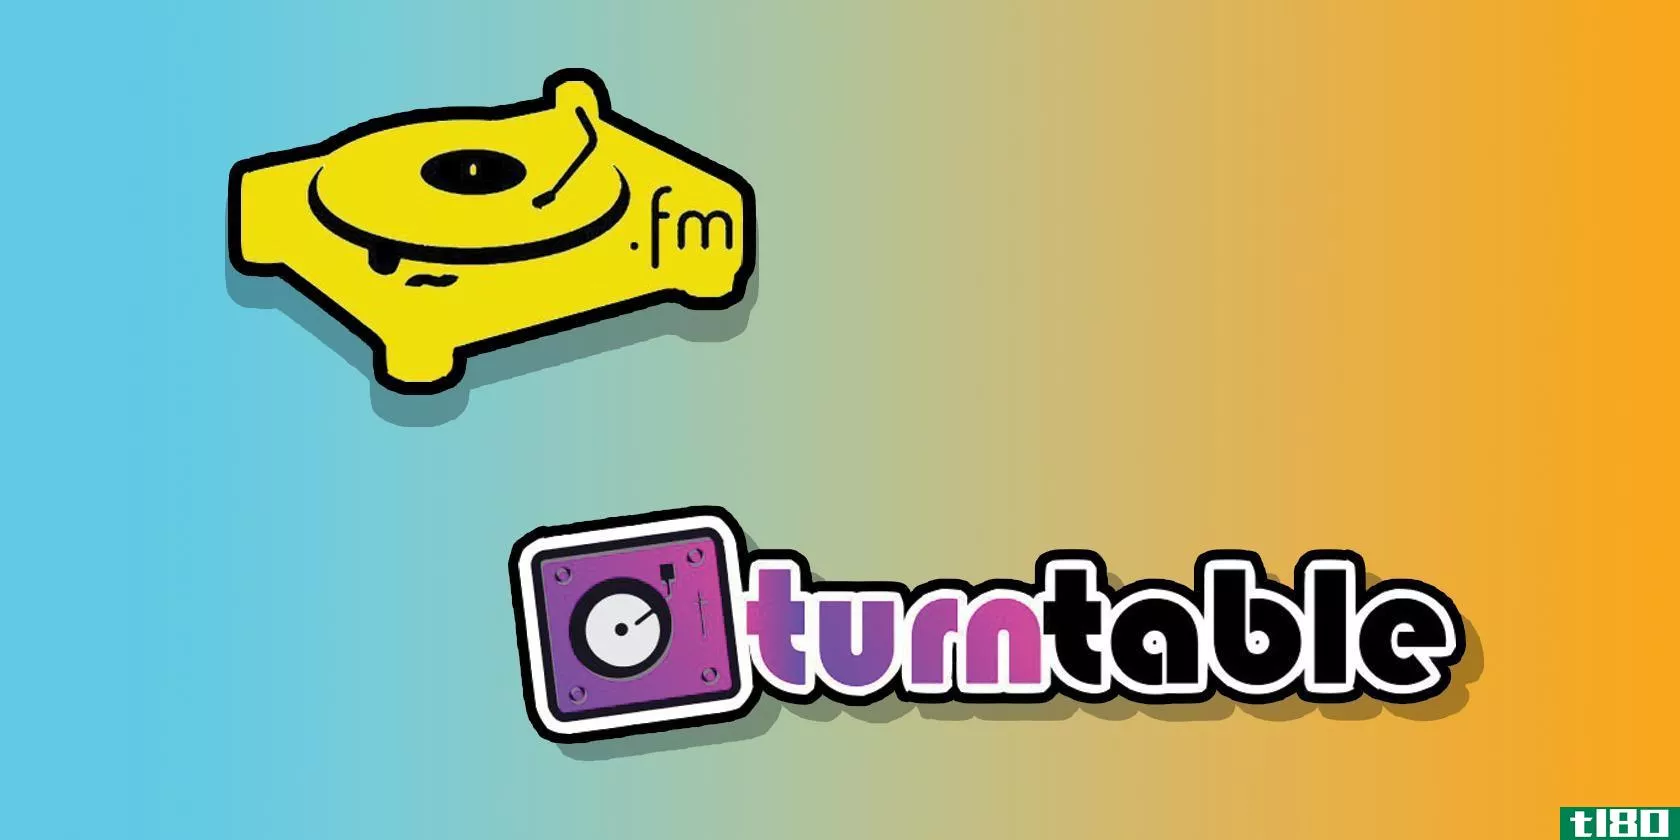 turntablefm and org logos